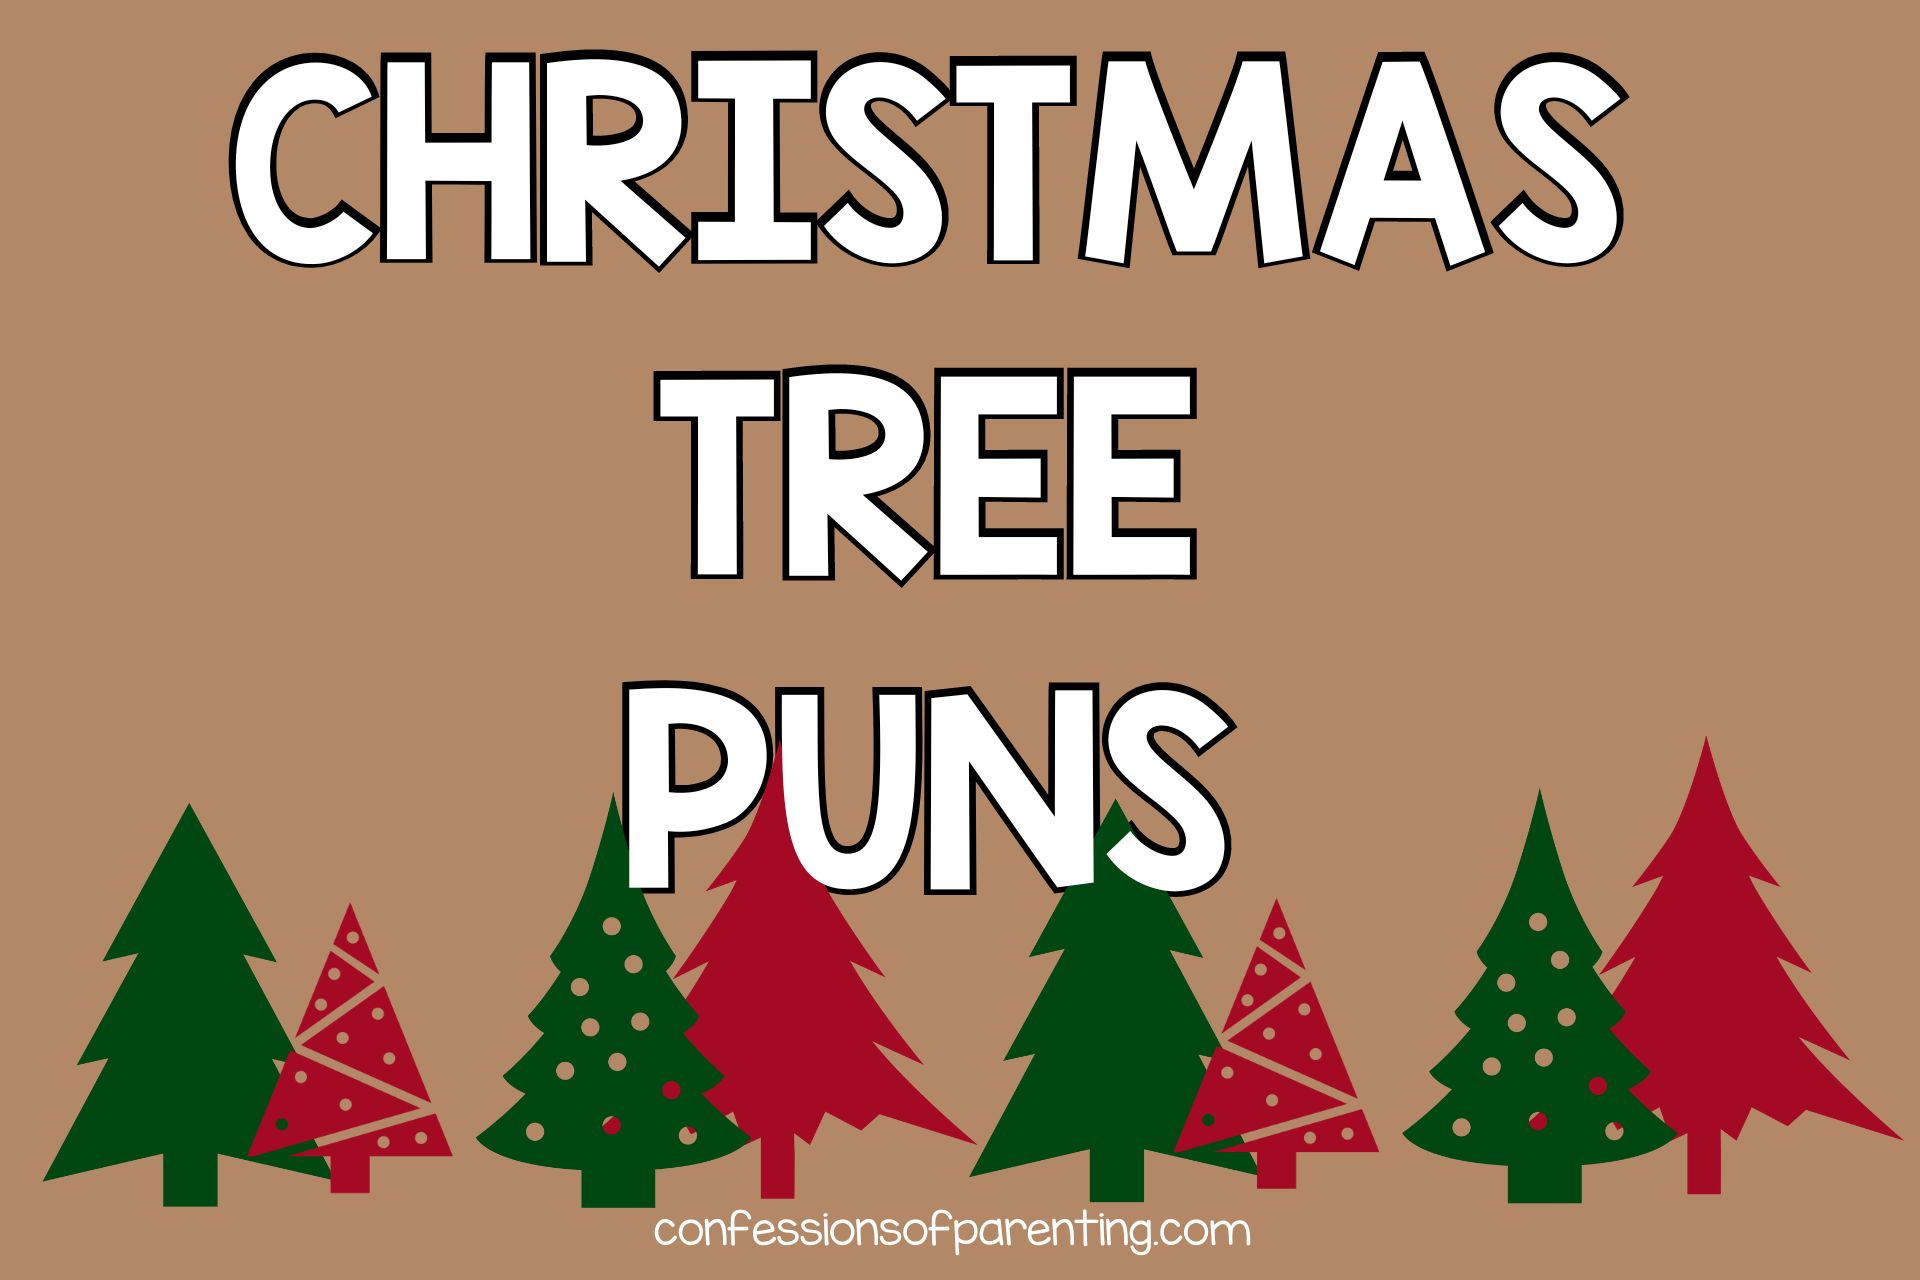 Christmas tree puns